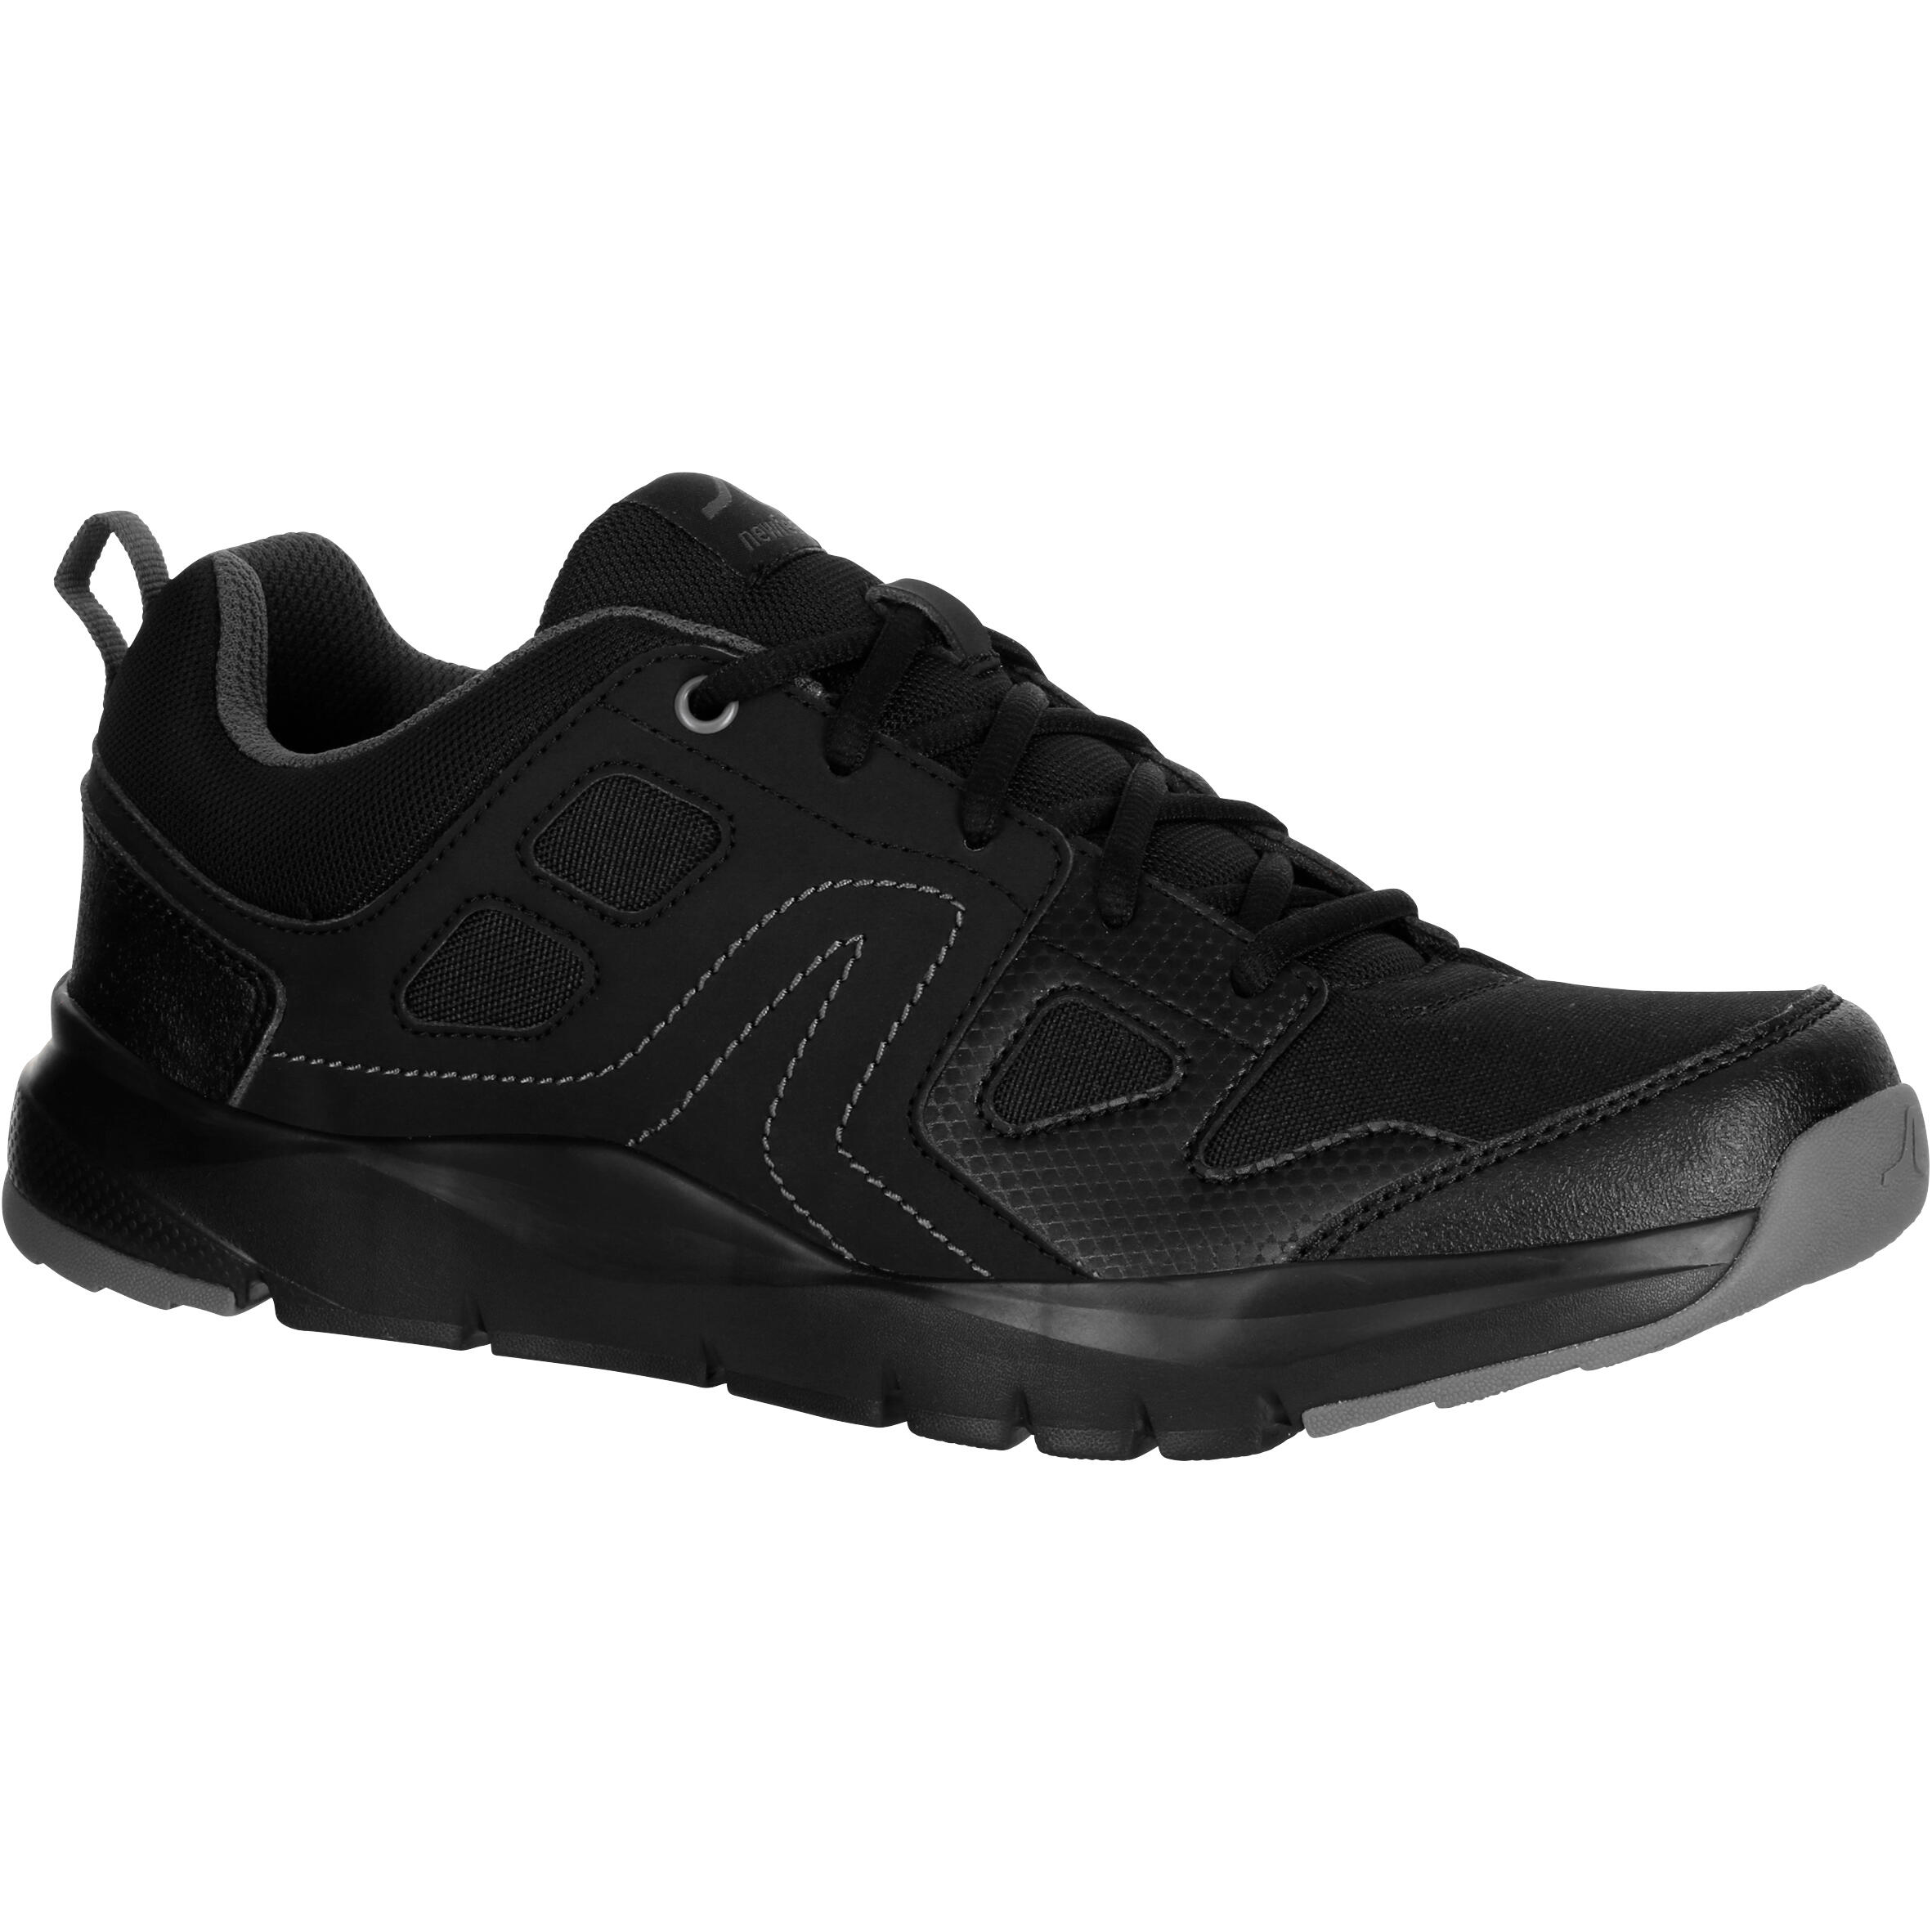 Buy Black Walking Shoes for Men HW 100 